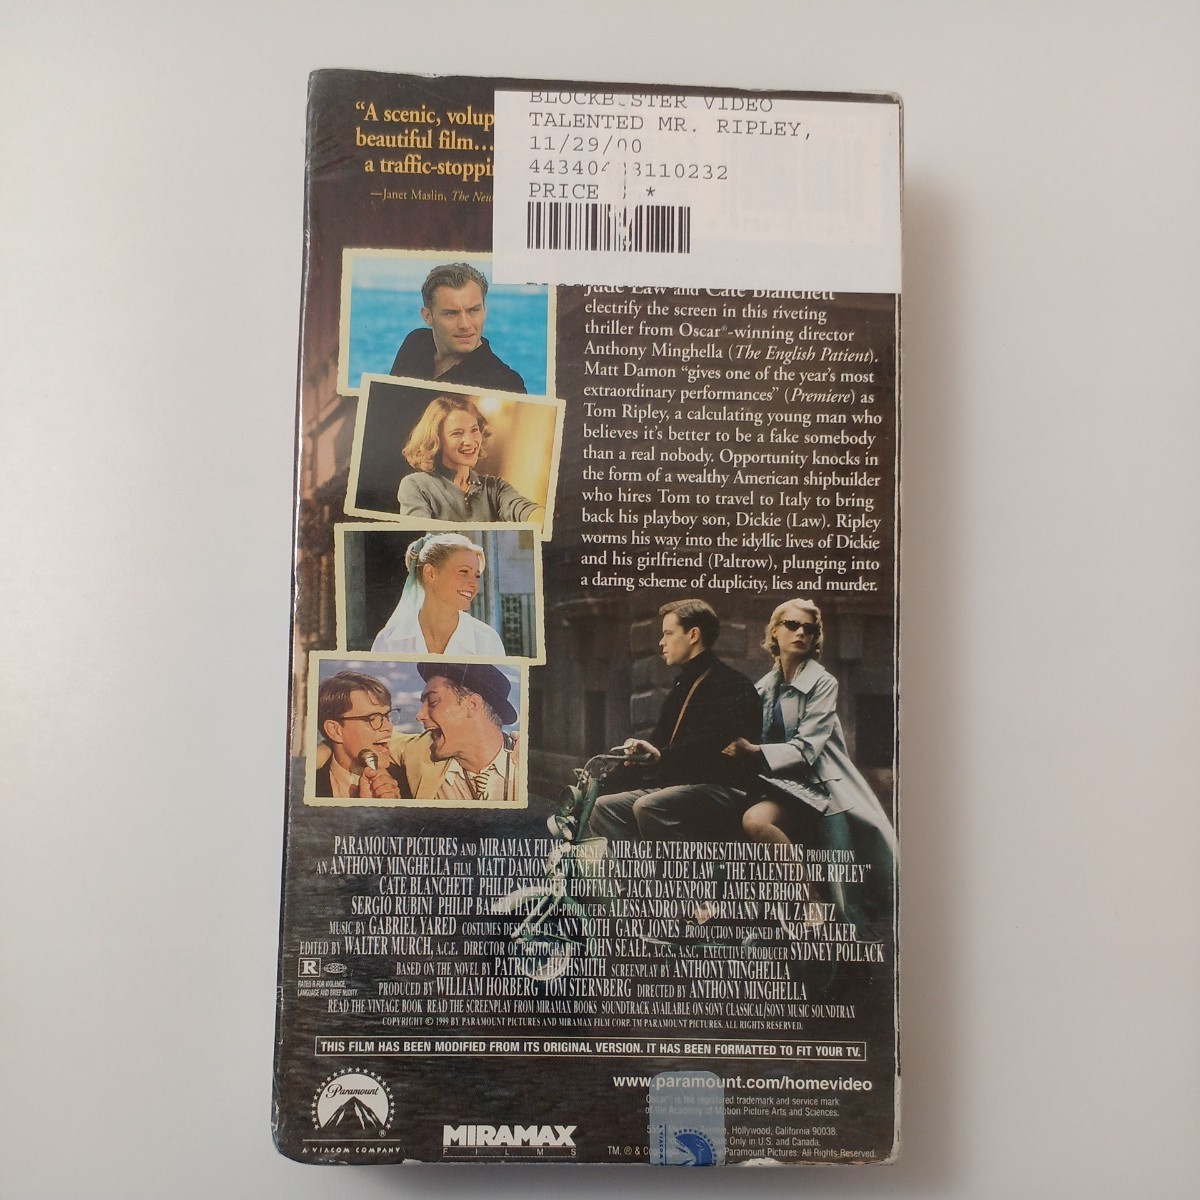 zvd-21!The Talented Mr. Ripley [VHS] видео 60 минут коврик teimon,gwines Pal Toro u др. Pro motion inter вид 